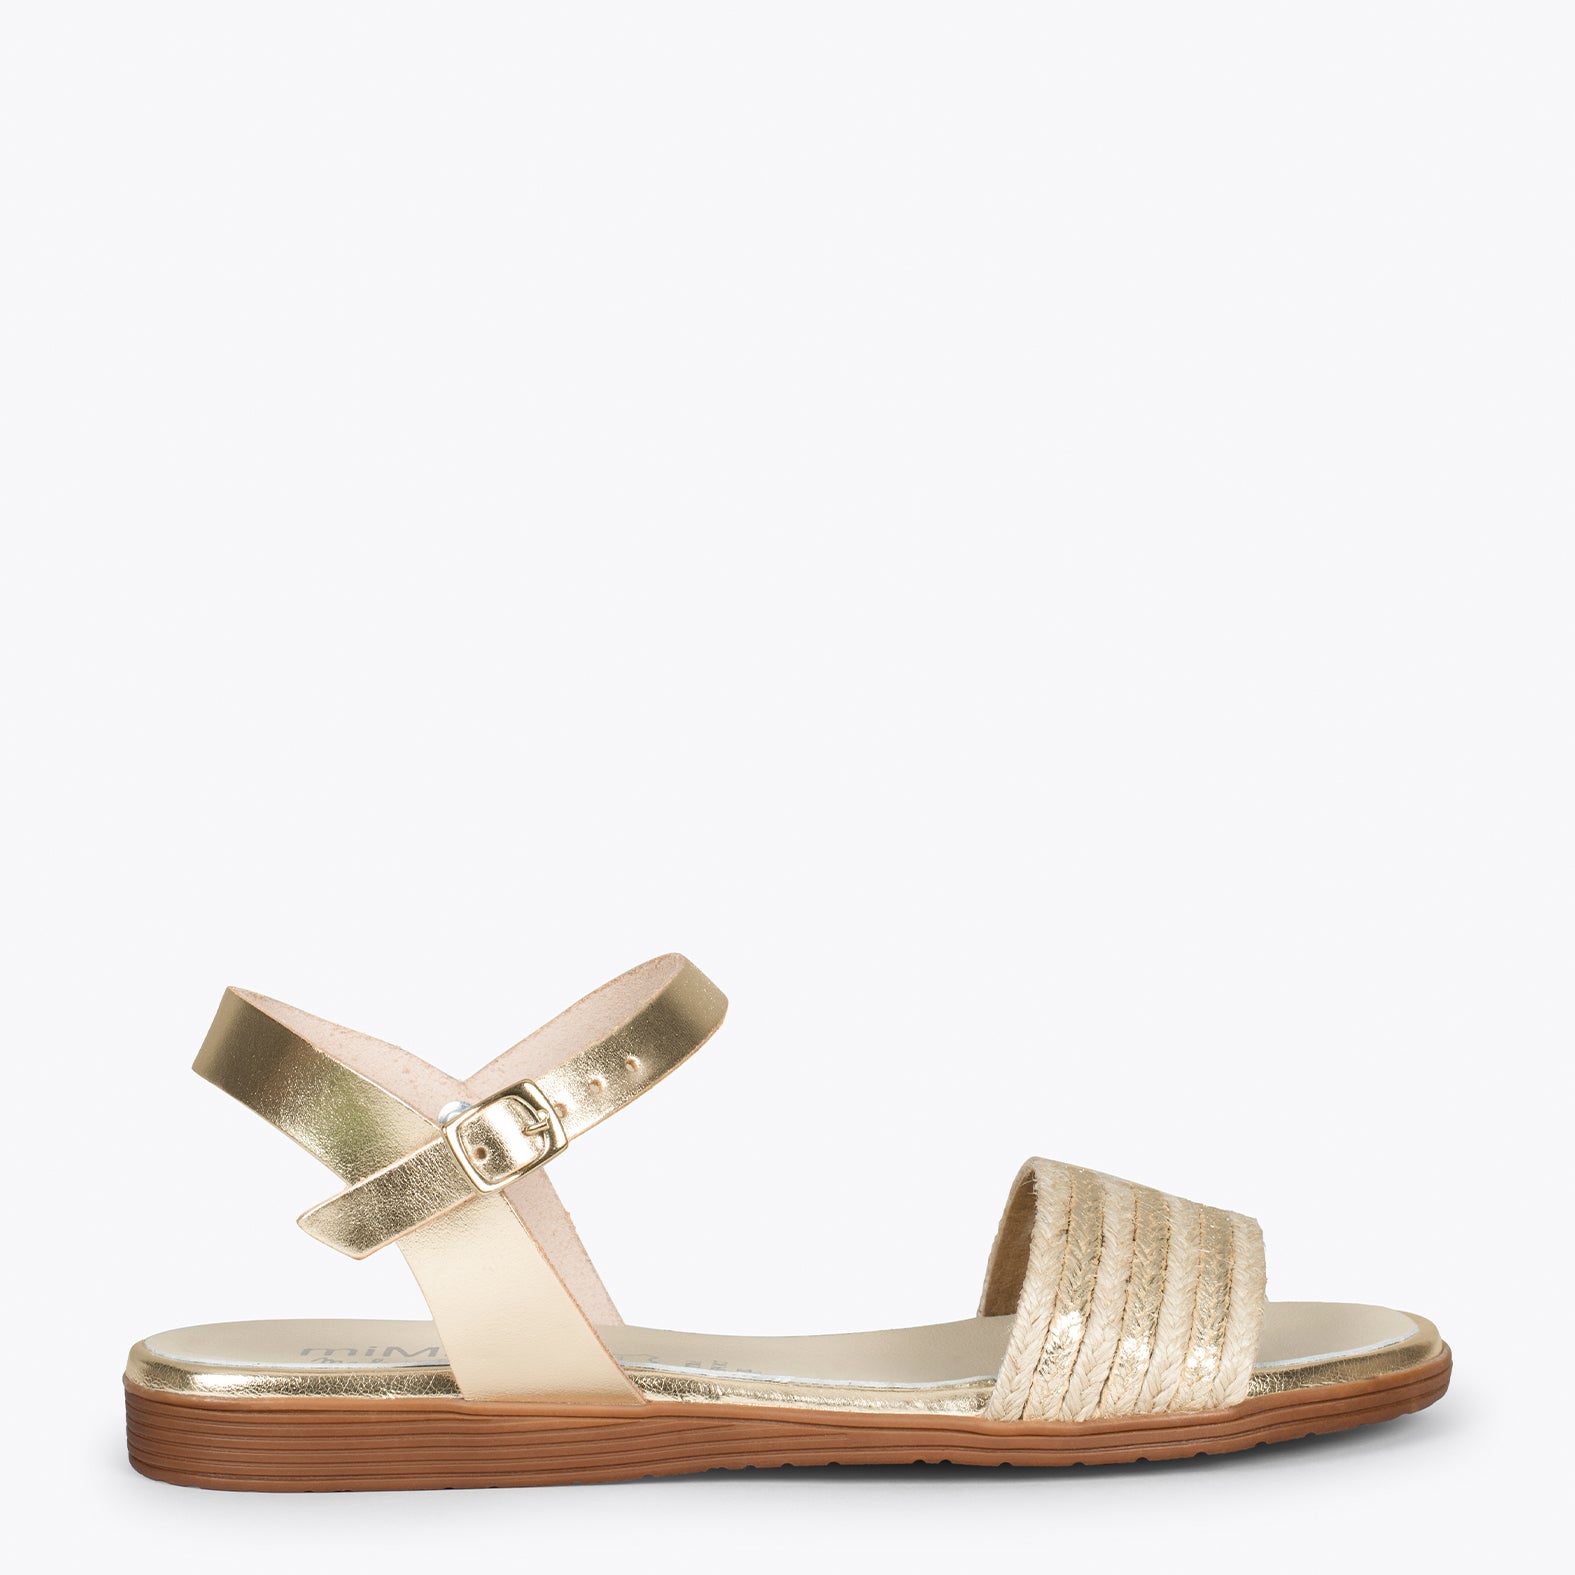 CERES – GOLD metallic flat sandal